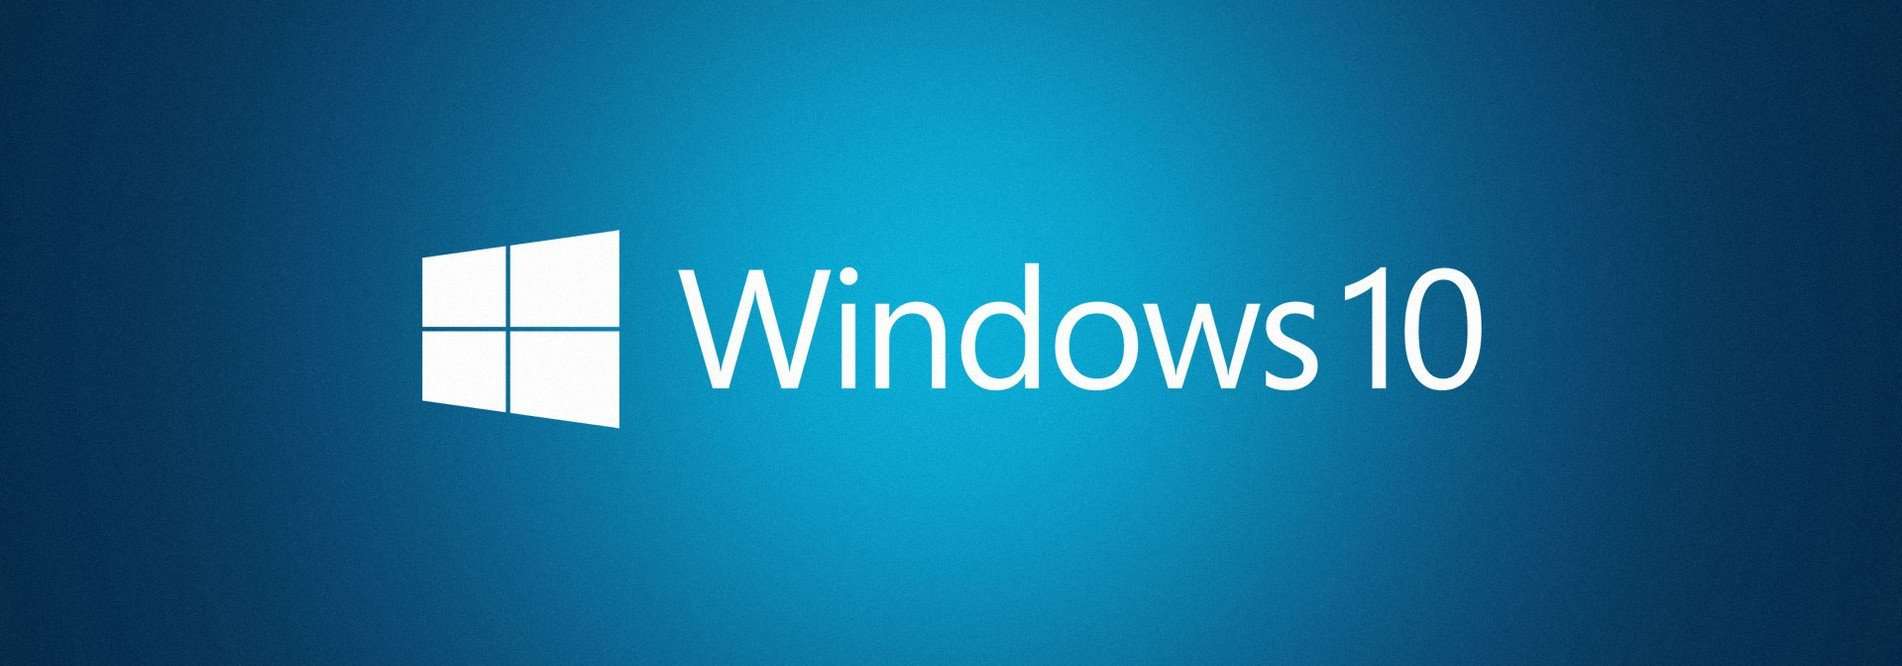 Microsoft to showcase Windows 10